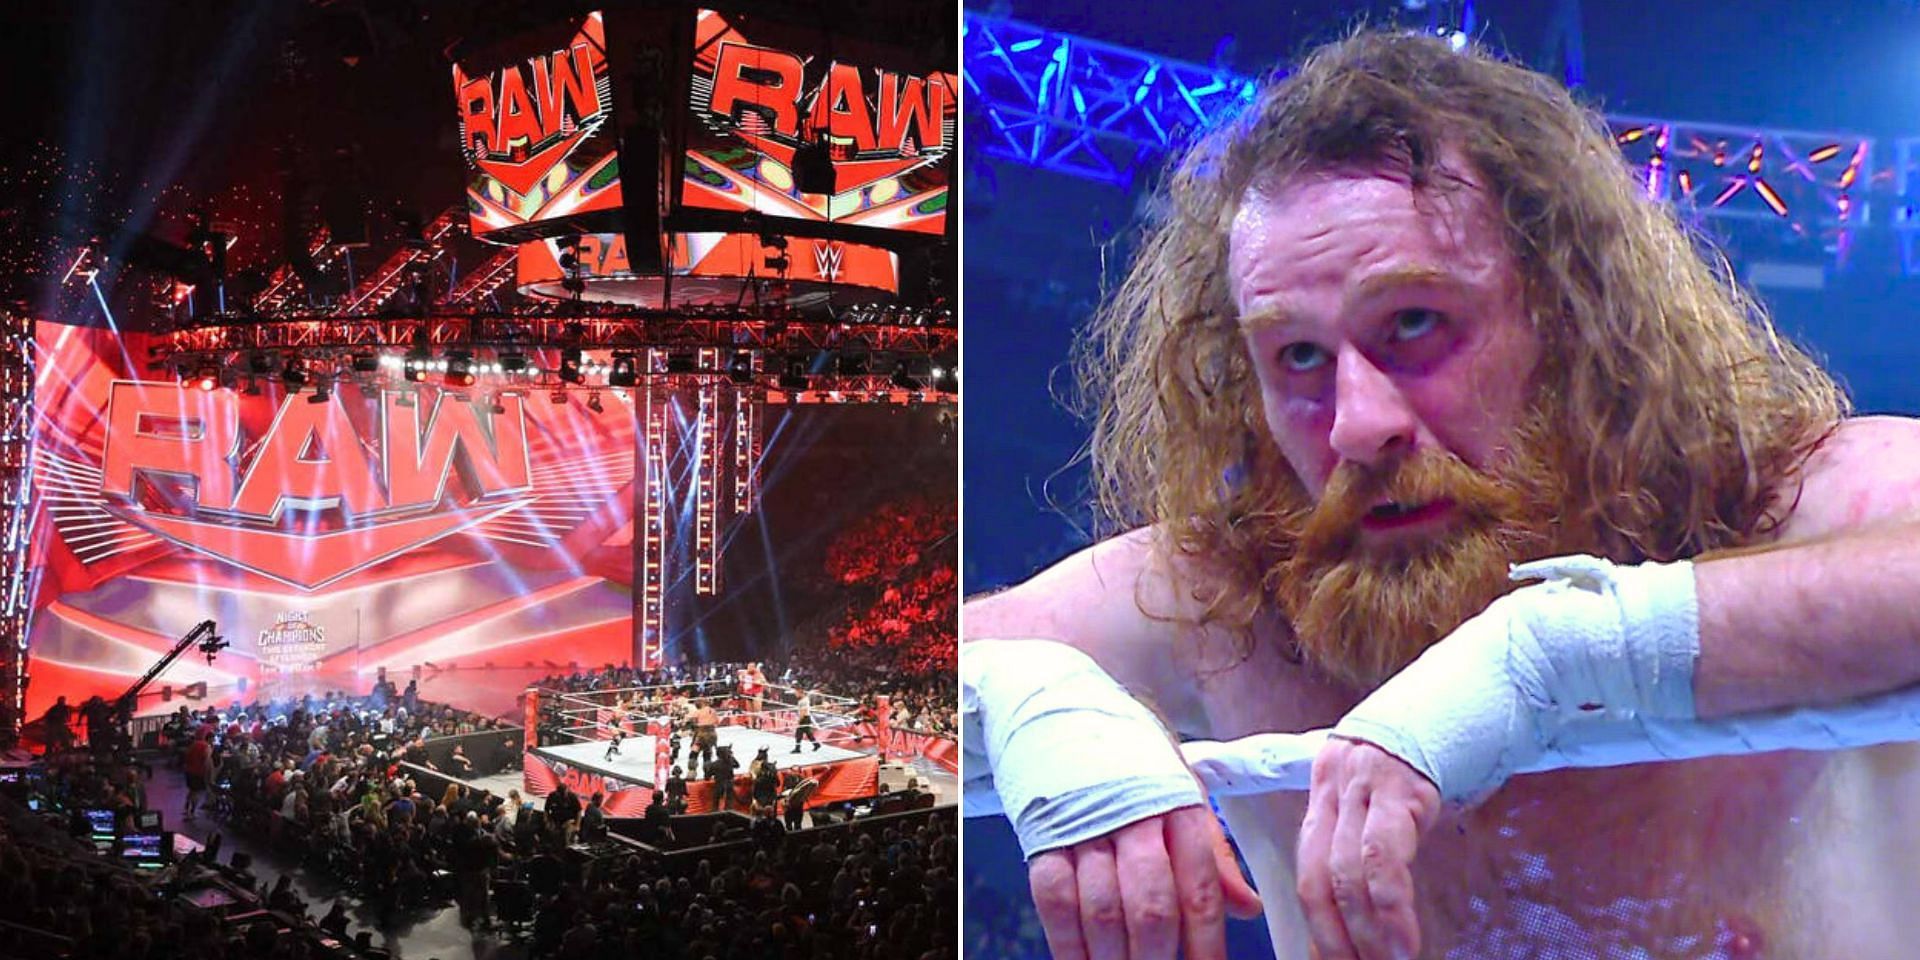 A top WWE star cost Sami Zayn his match